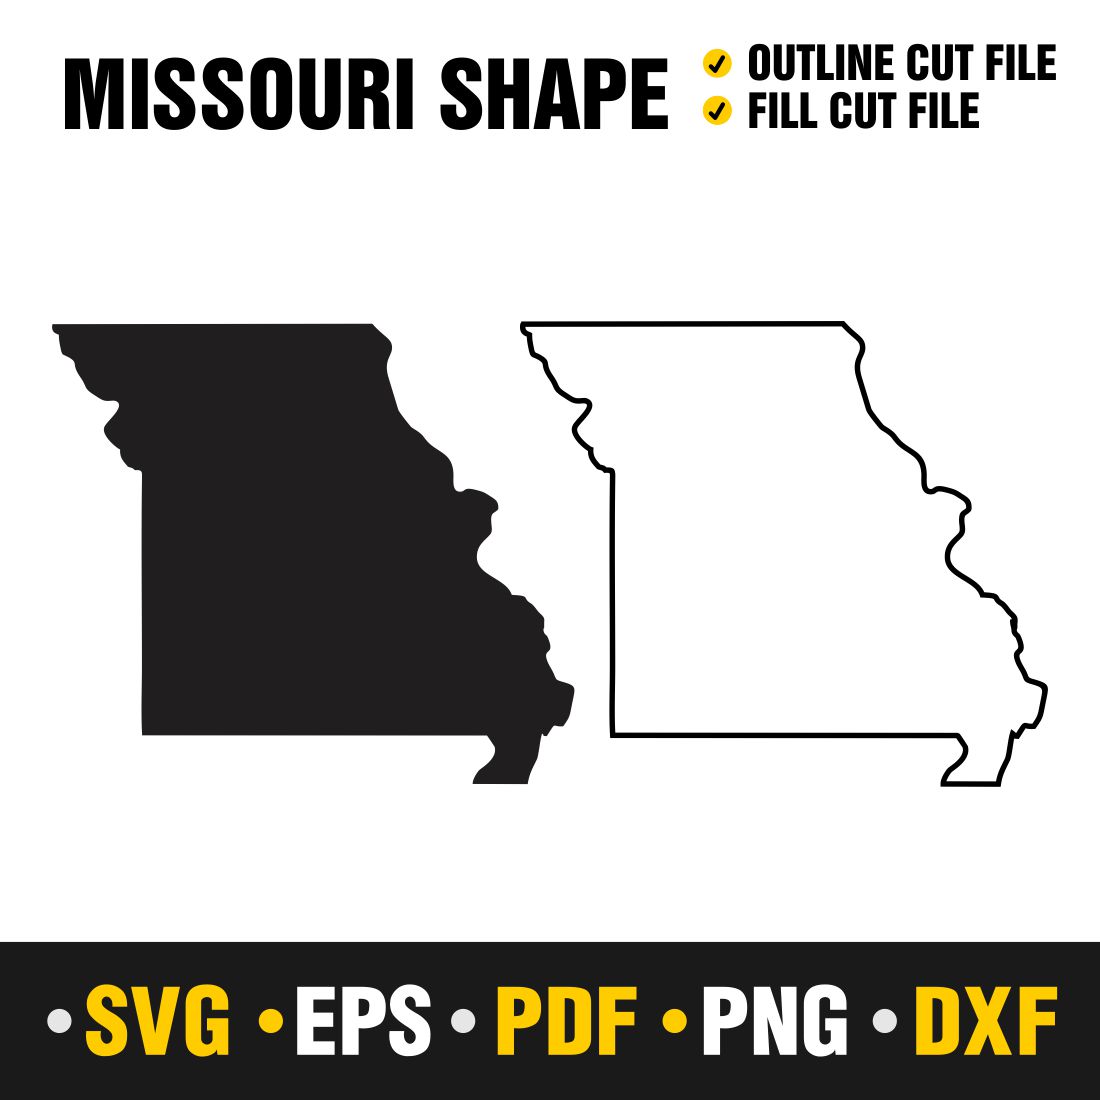 Missouri SVG, PNG, PDF, EPS & DXF cover image.